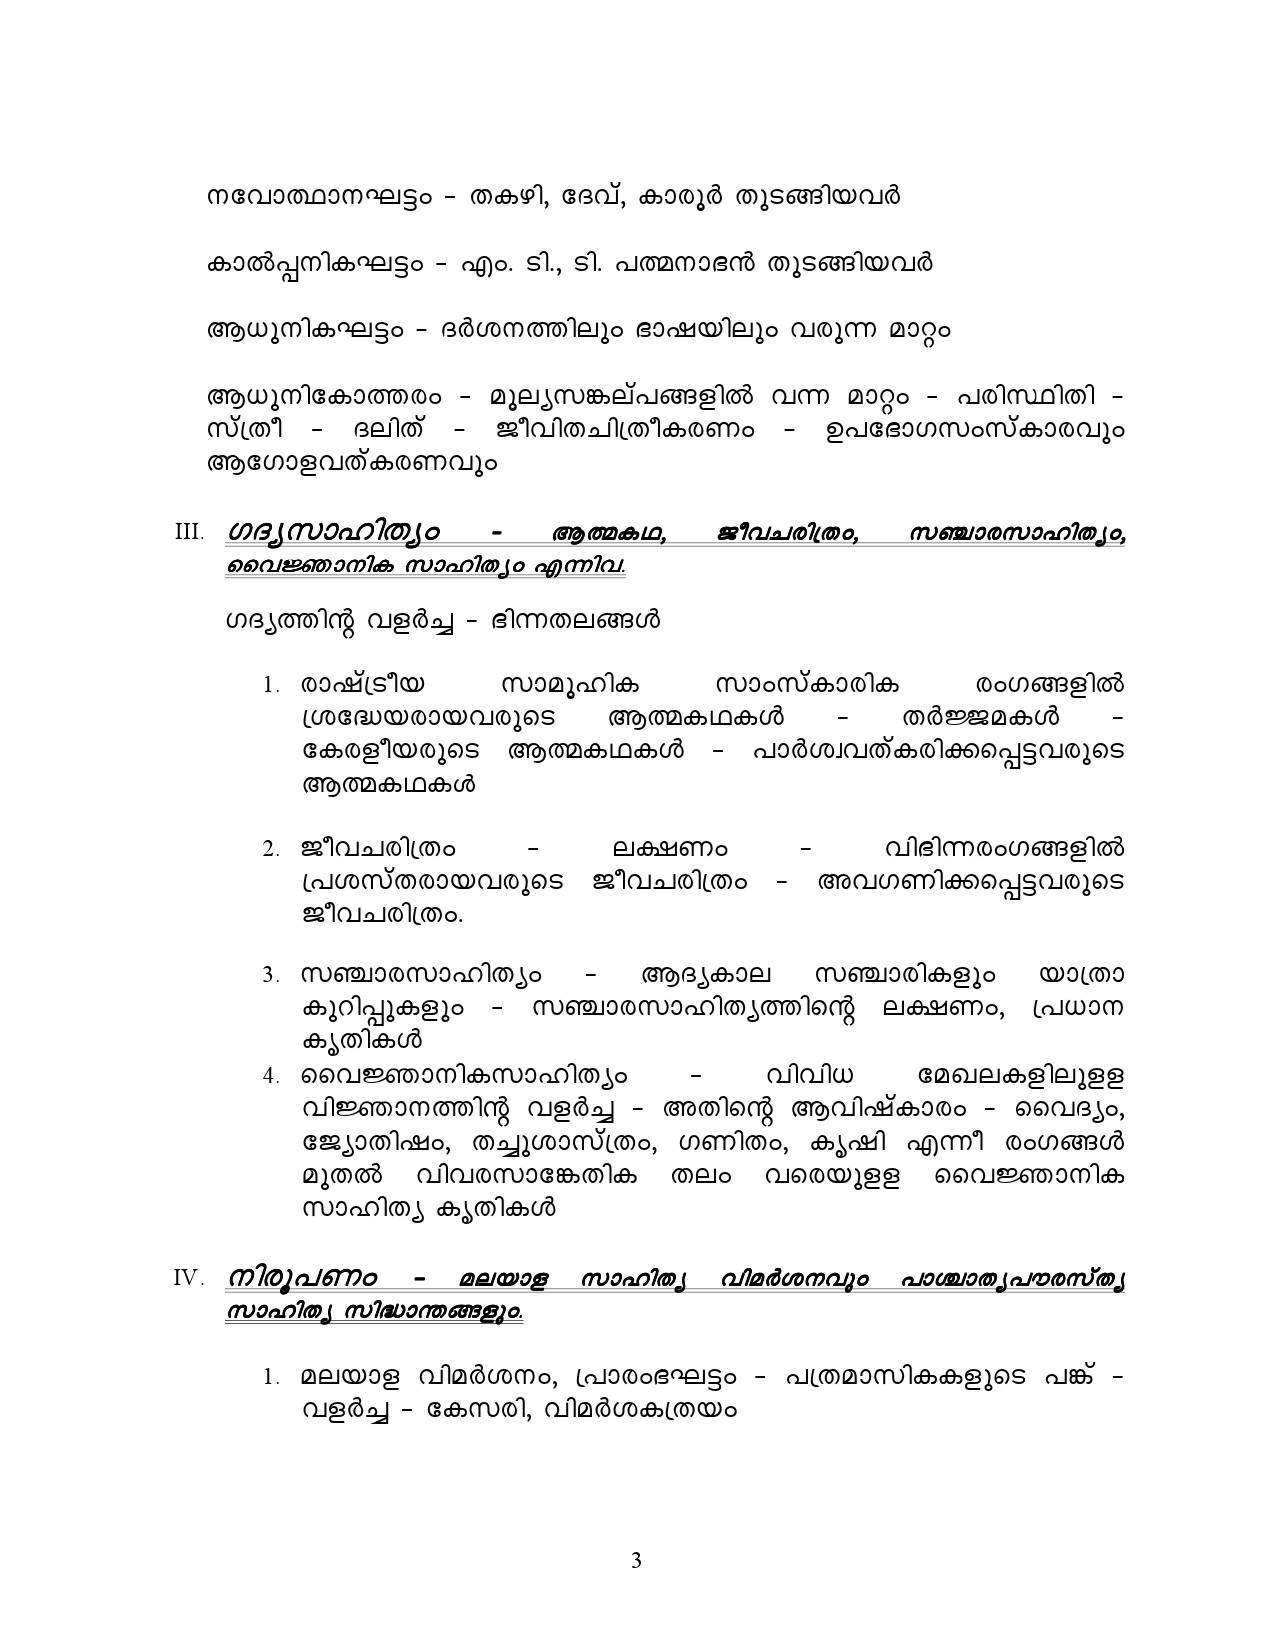 High School Assistant Malayalam Part A Kerala Examination Syllabus 2021 - Notification Image 3